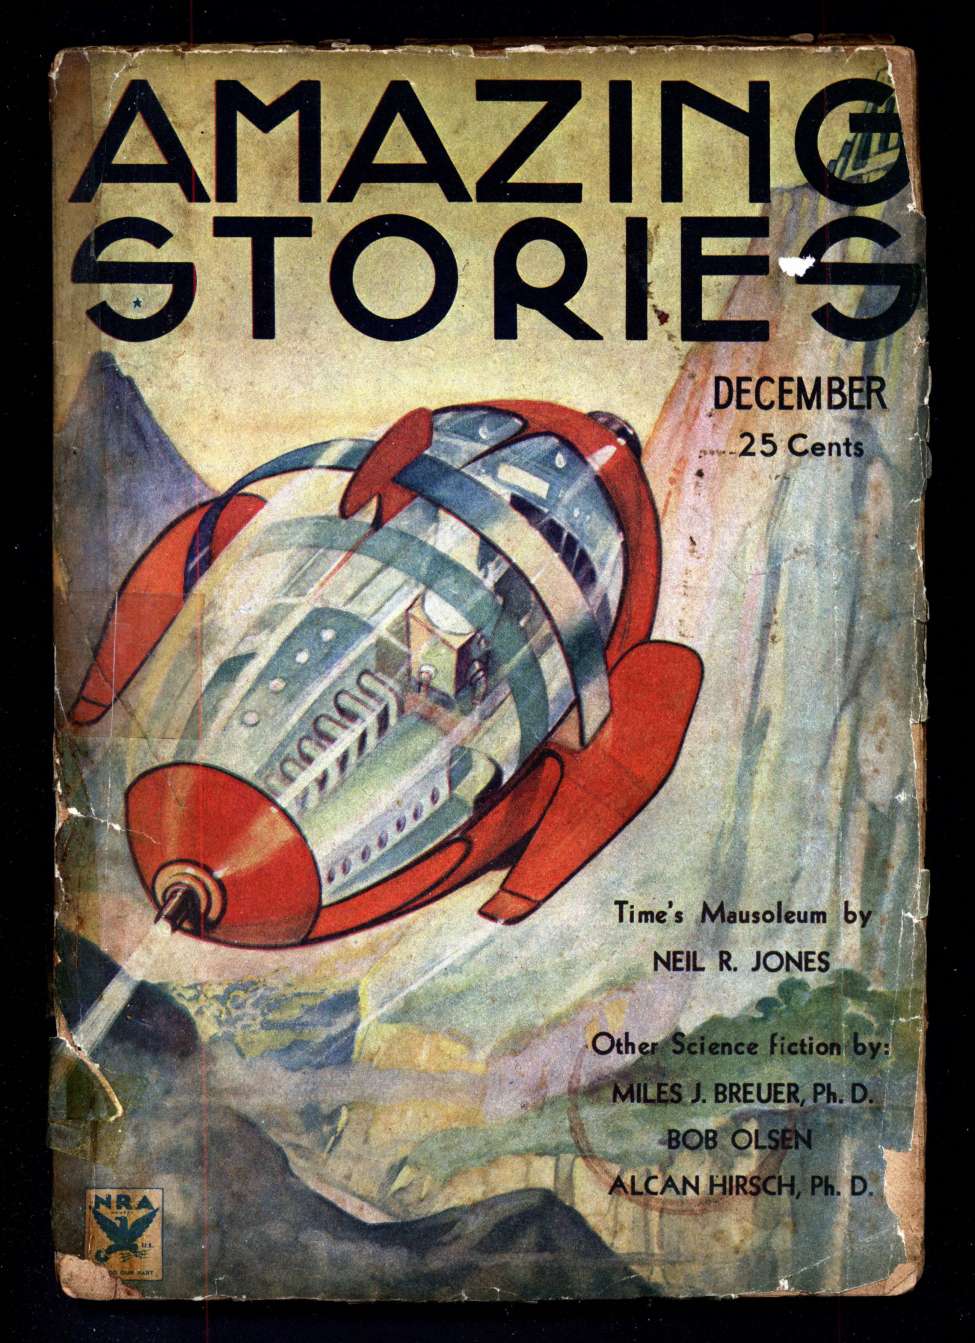 Book Cover For Amazing Stories v8 8 - Time's Mausoleum - Neil R. Jones